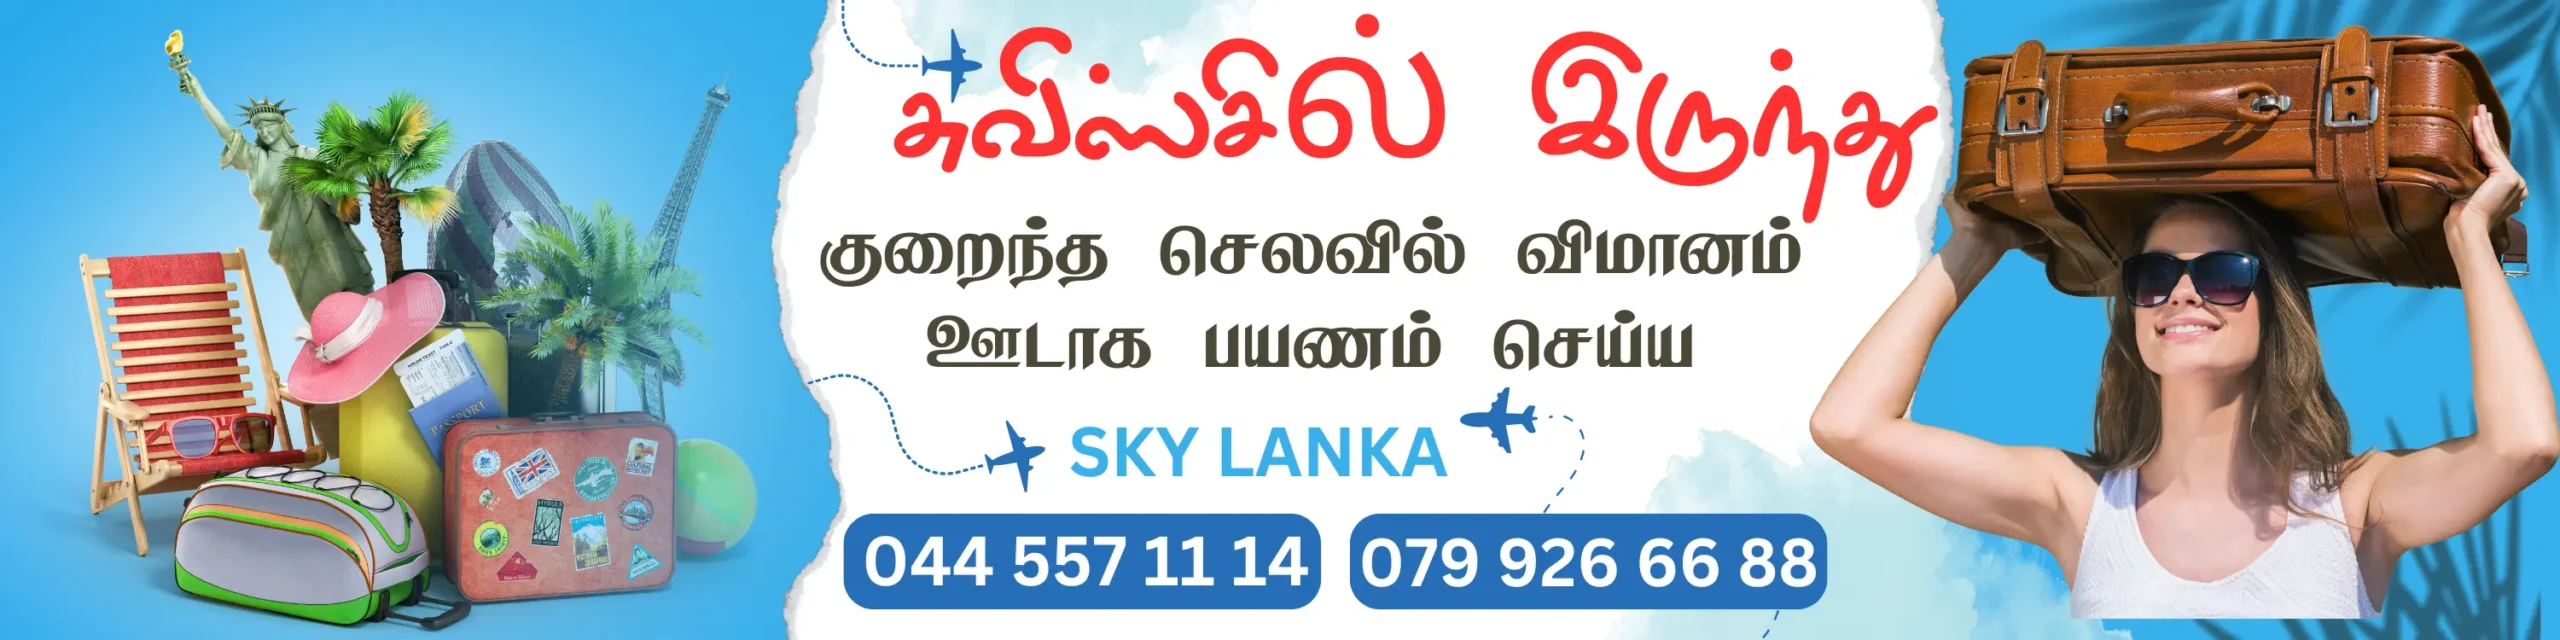 Sky Lanka